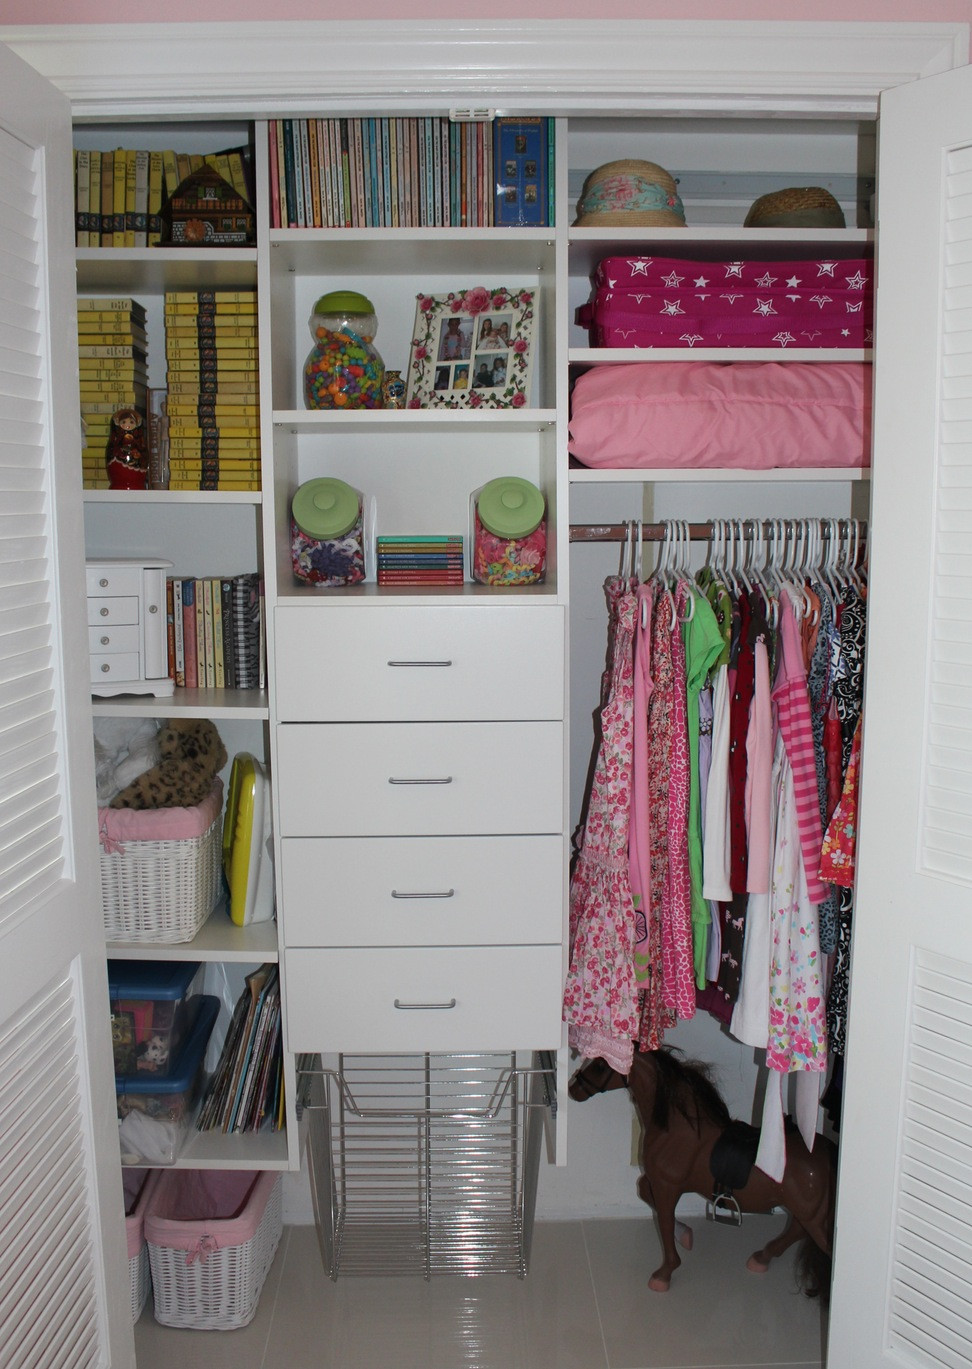 Best ideas about Small Closet Organization Ideas DIY
. Save or Pin Small Closet Design Ideas Storage Inspiration Now.